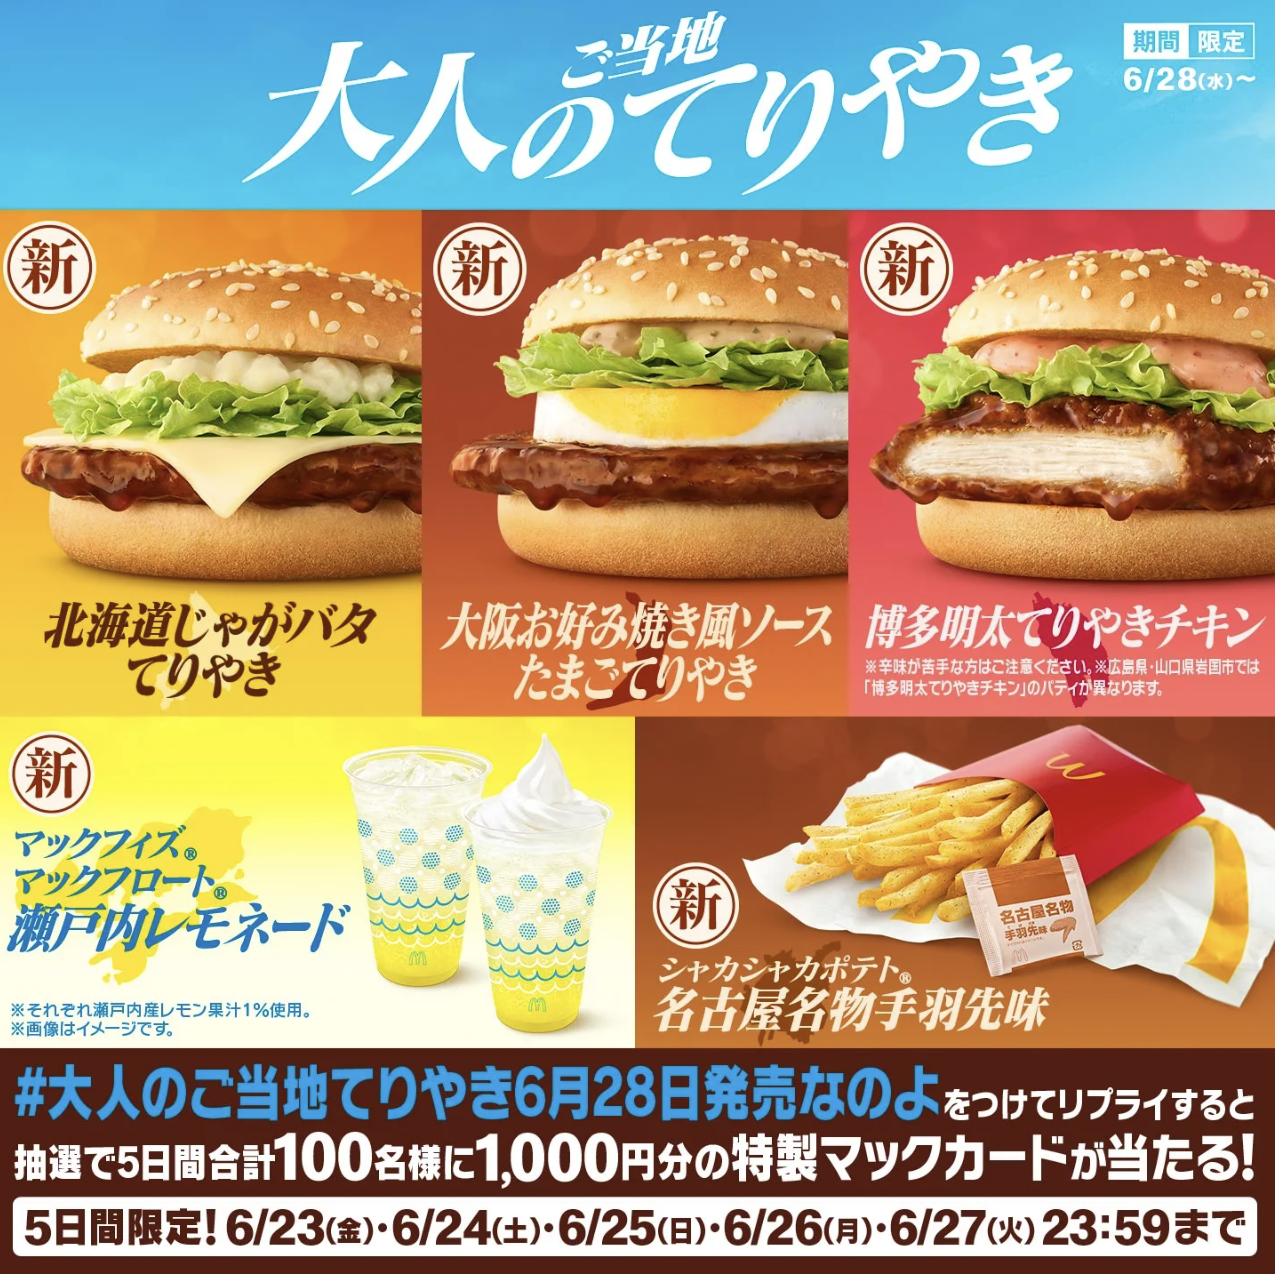 McDonald's Japan adds flavor of okonomiyaki to menu for limited